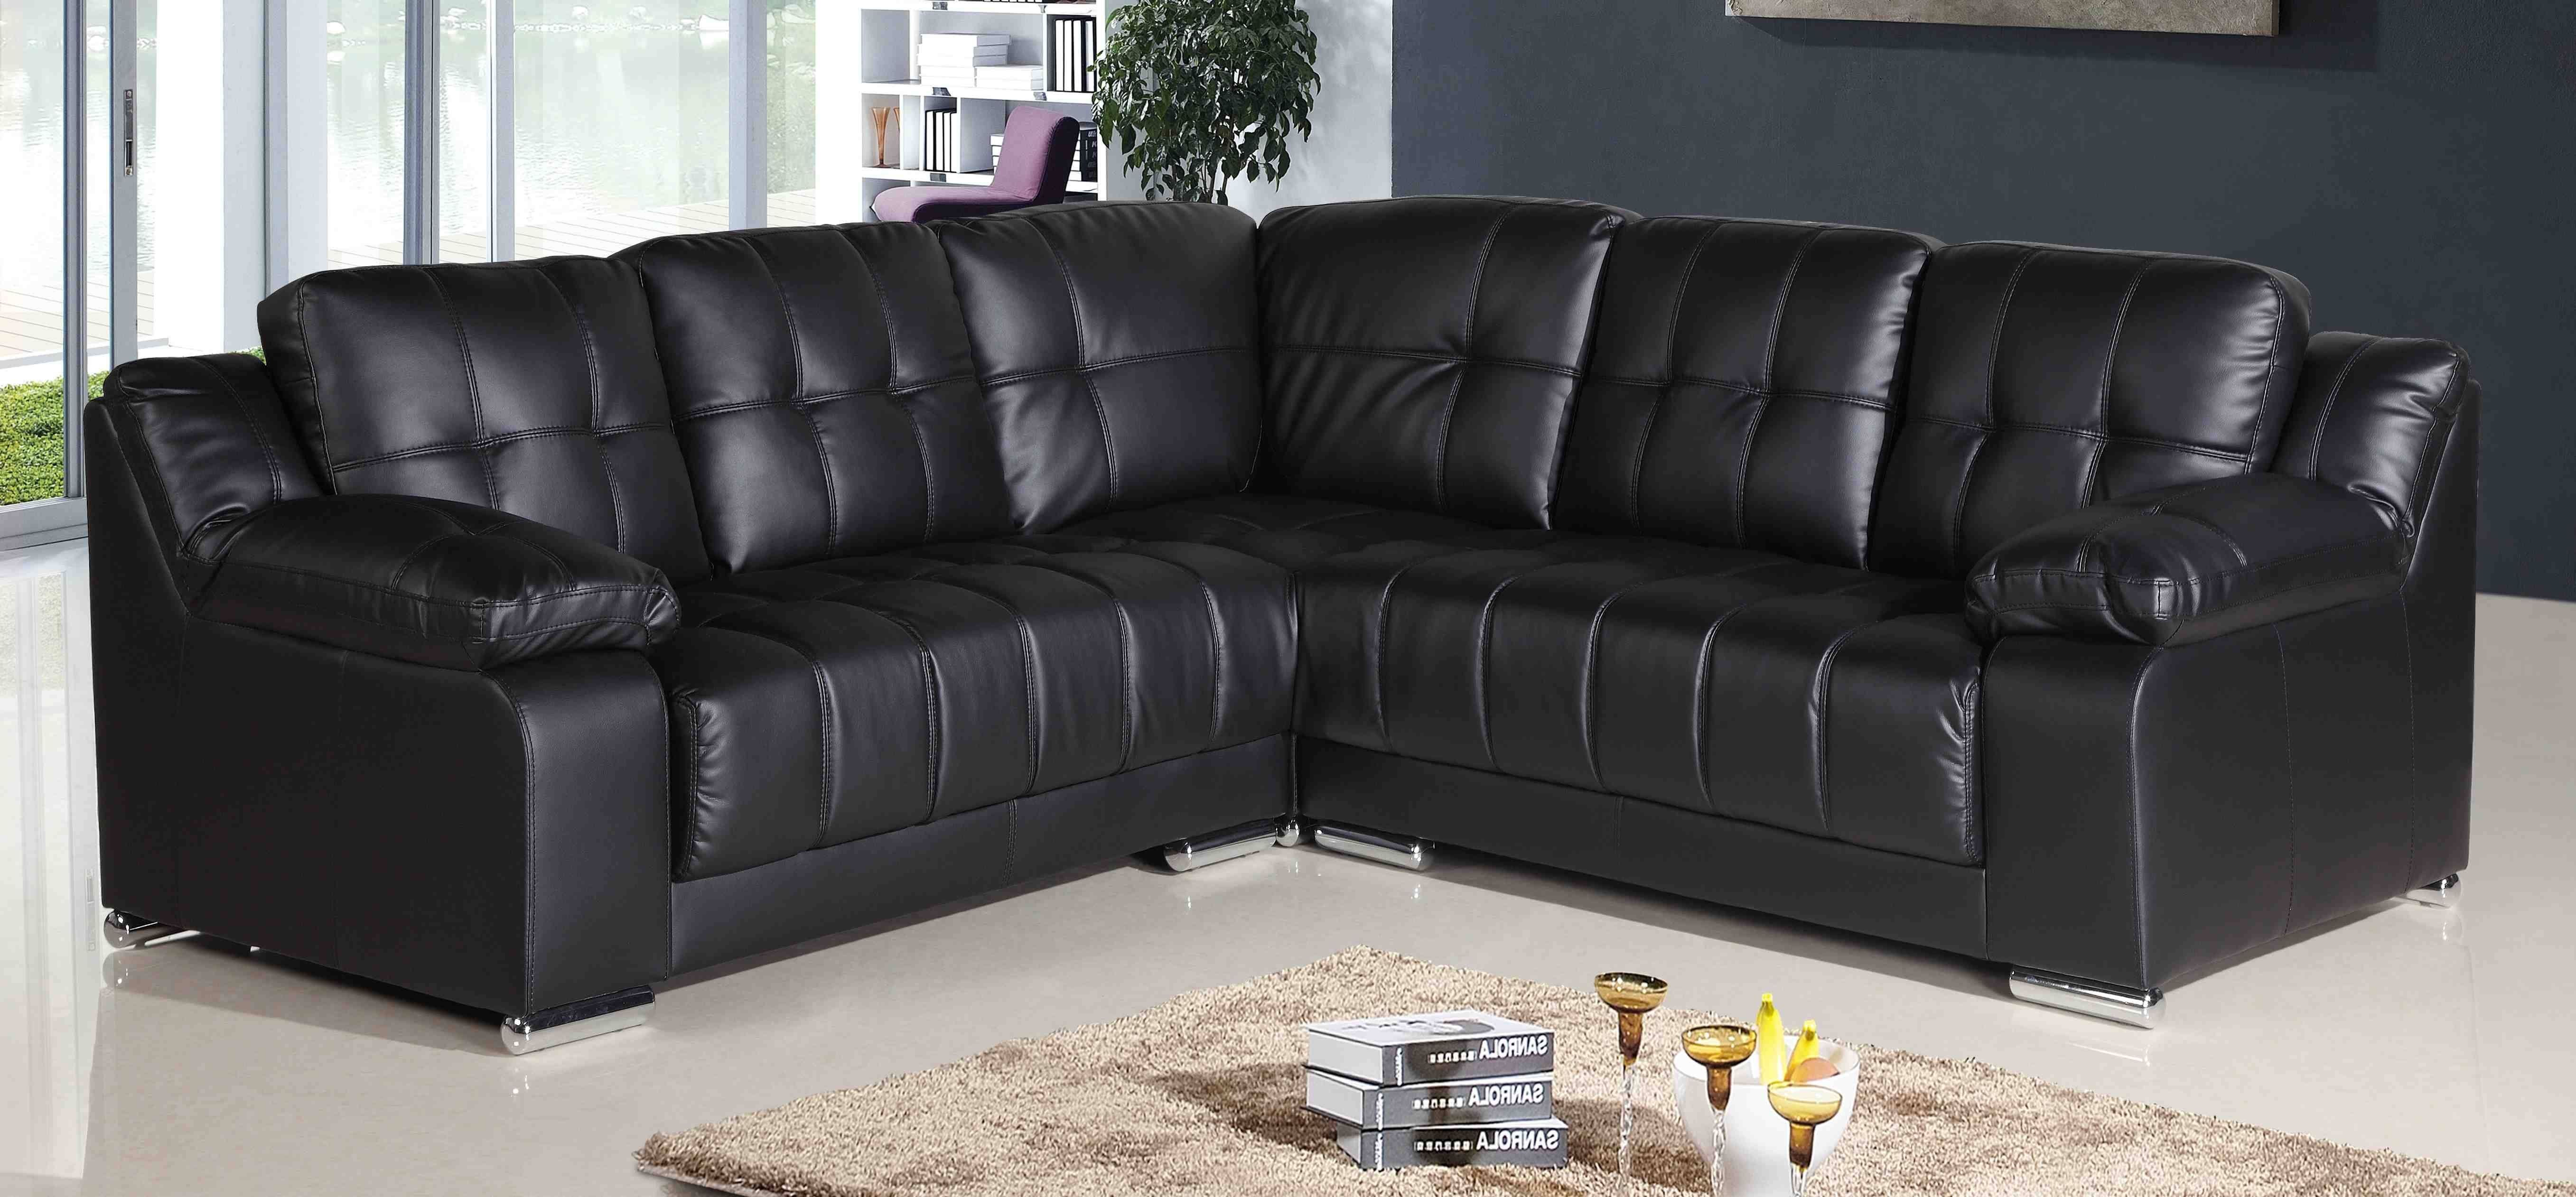 cheap black leather corner sofa uk